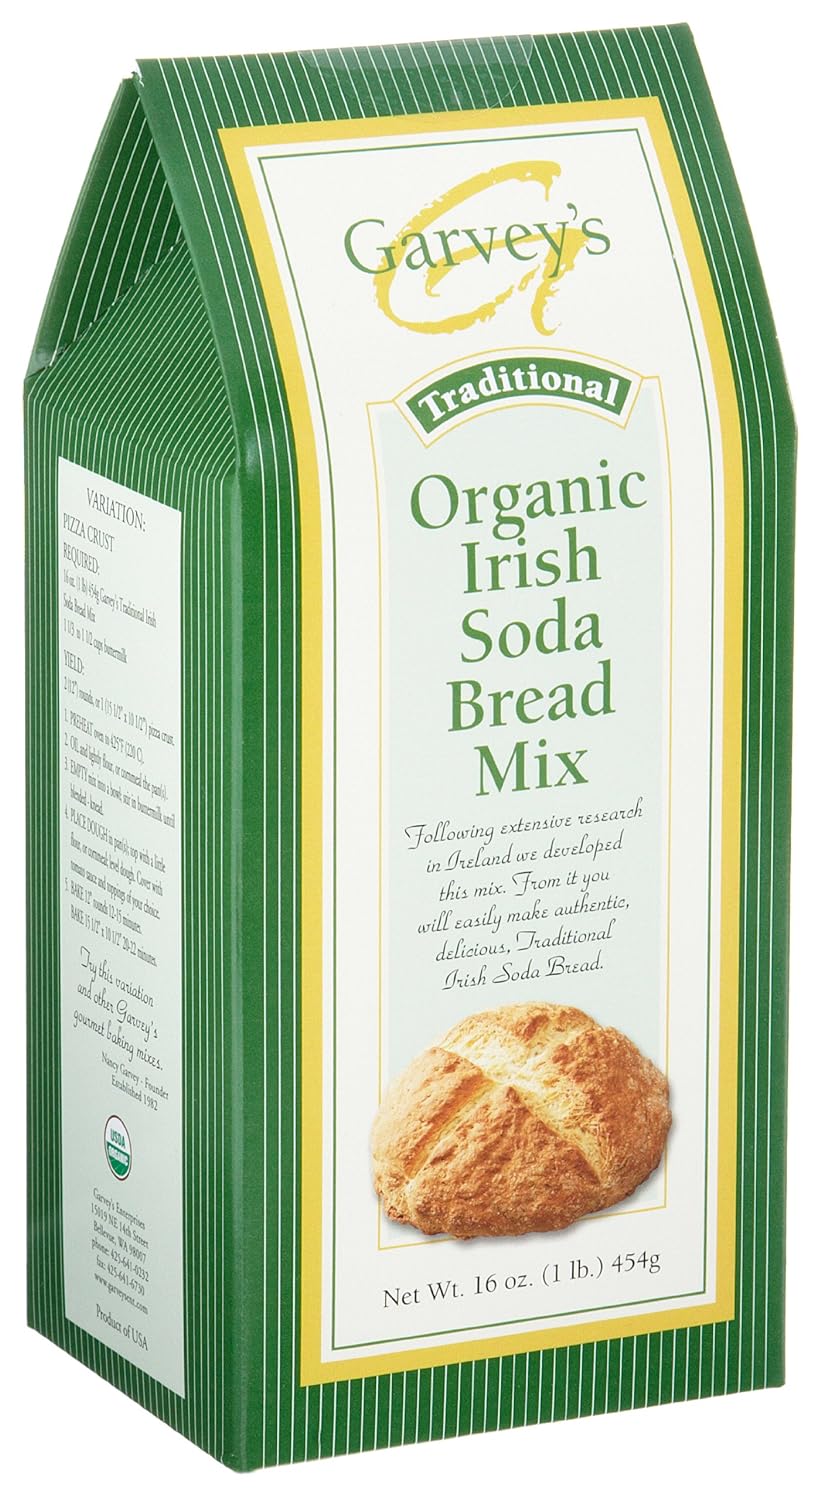 Garvey's Organic Traditional Irish Soda Bread Mix, 16-Ounce Box, 102165-1 : Grocery & Gourmet Food